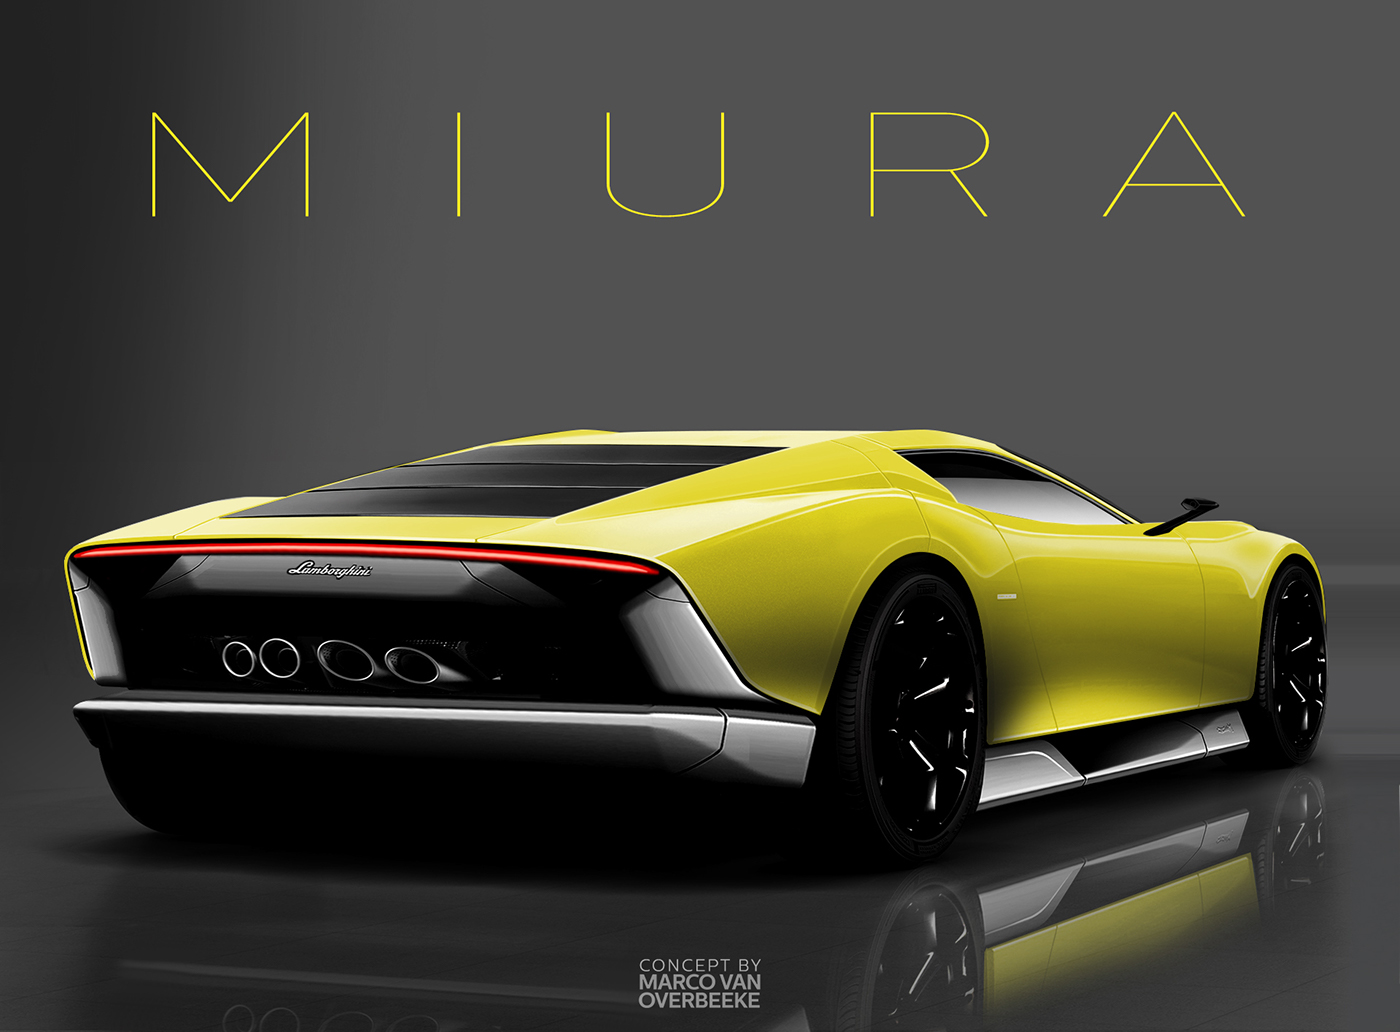 Lamborghini Miura Nuova concept II on Behance